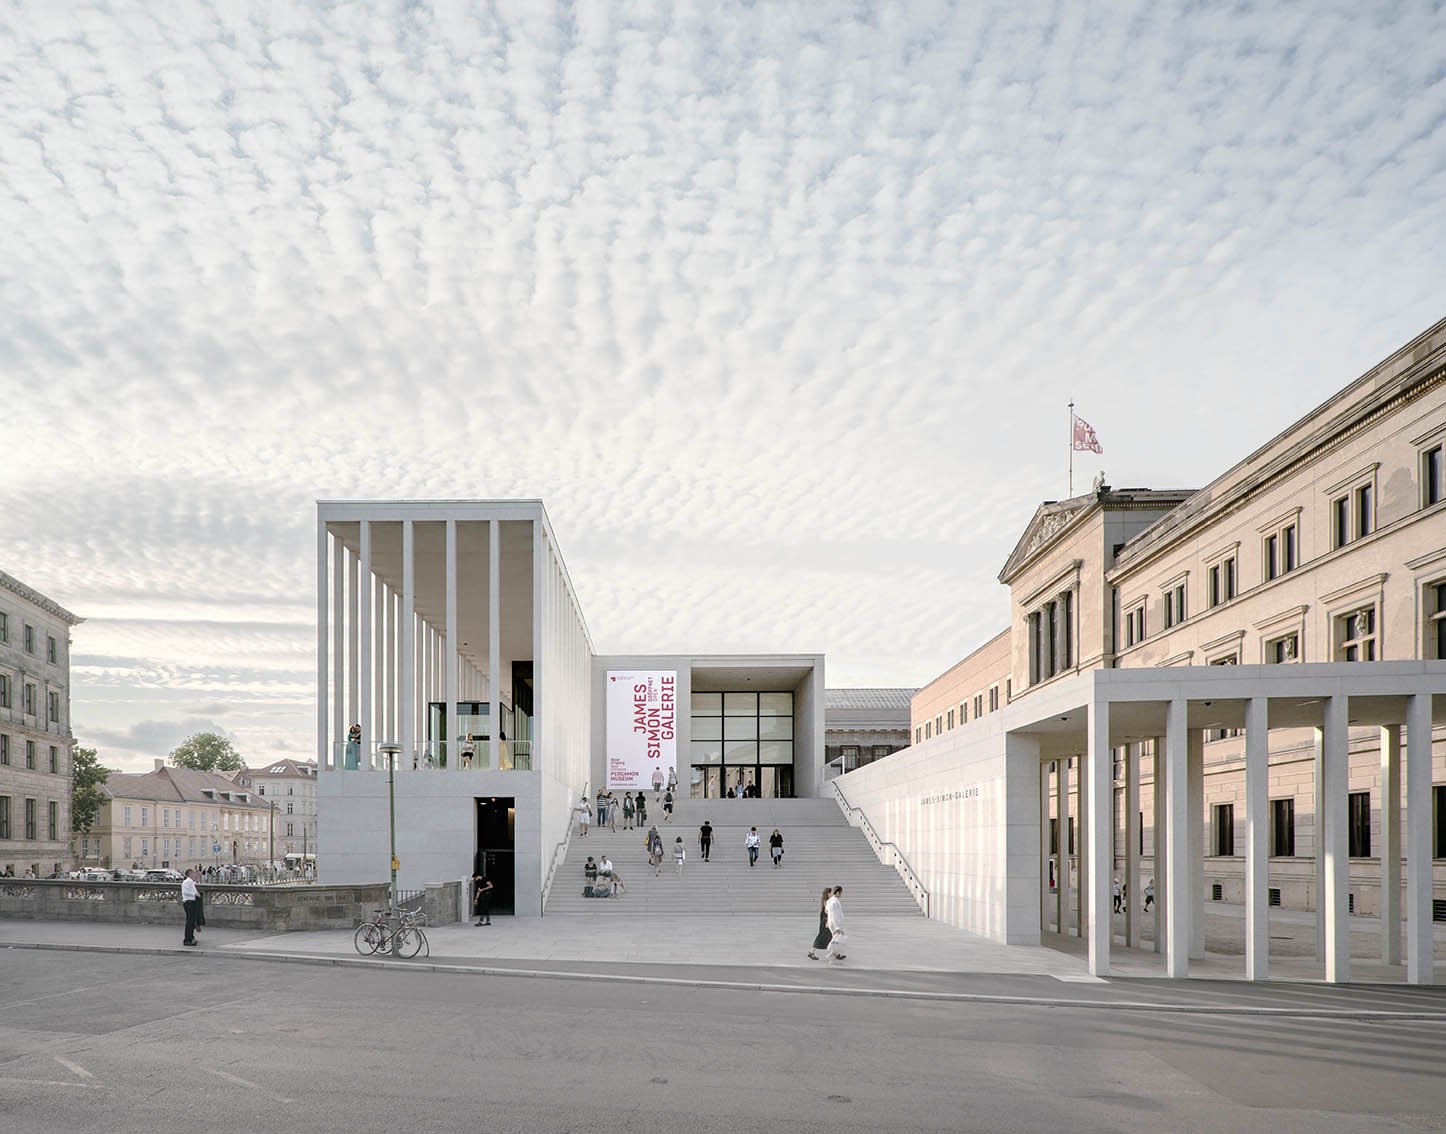 James-Simon Galerie 2018 Berlin, Germany. Photo courtesy of Simon Menges. Photo courtesy of The Hyatt Foundation -The Pritzker Architecture Prize 